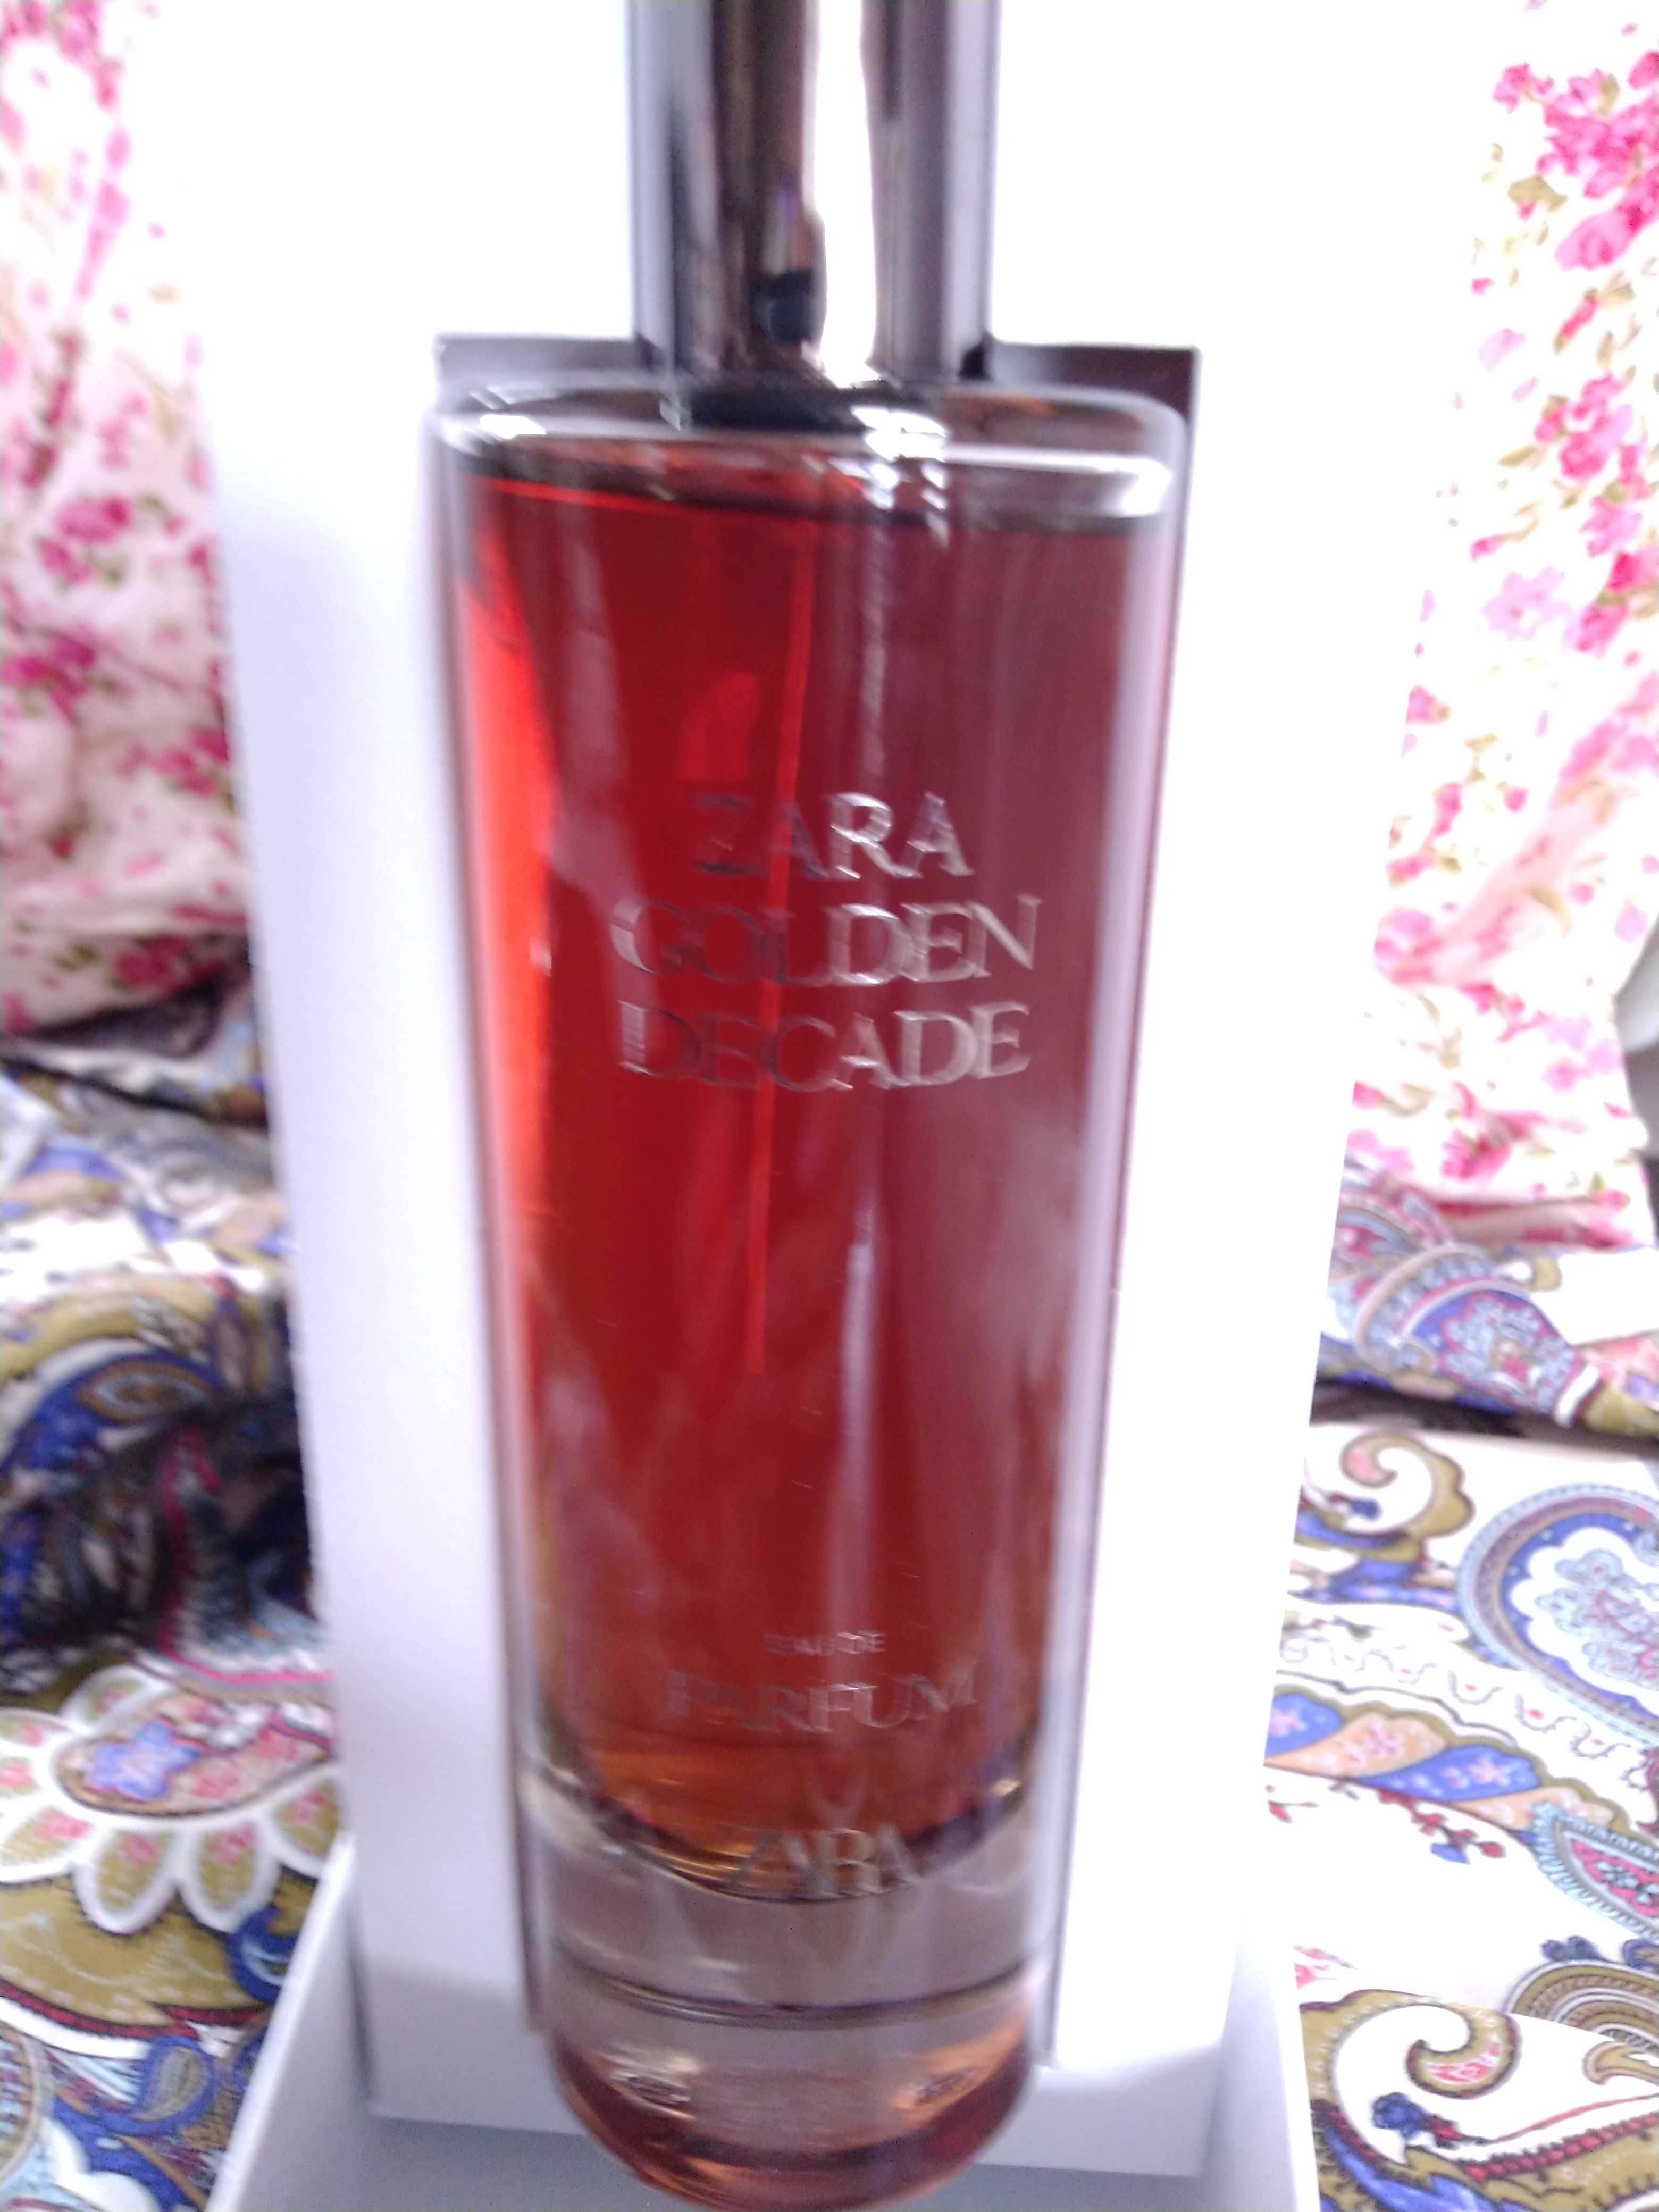 Perfumy Zary 80 ml Golden Decade